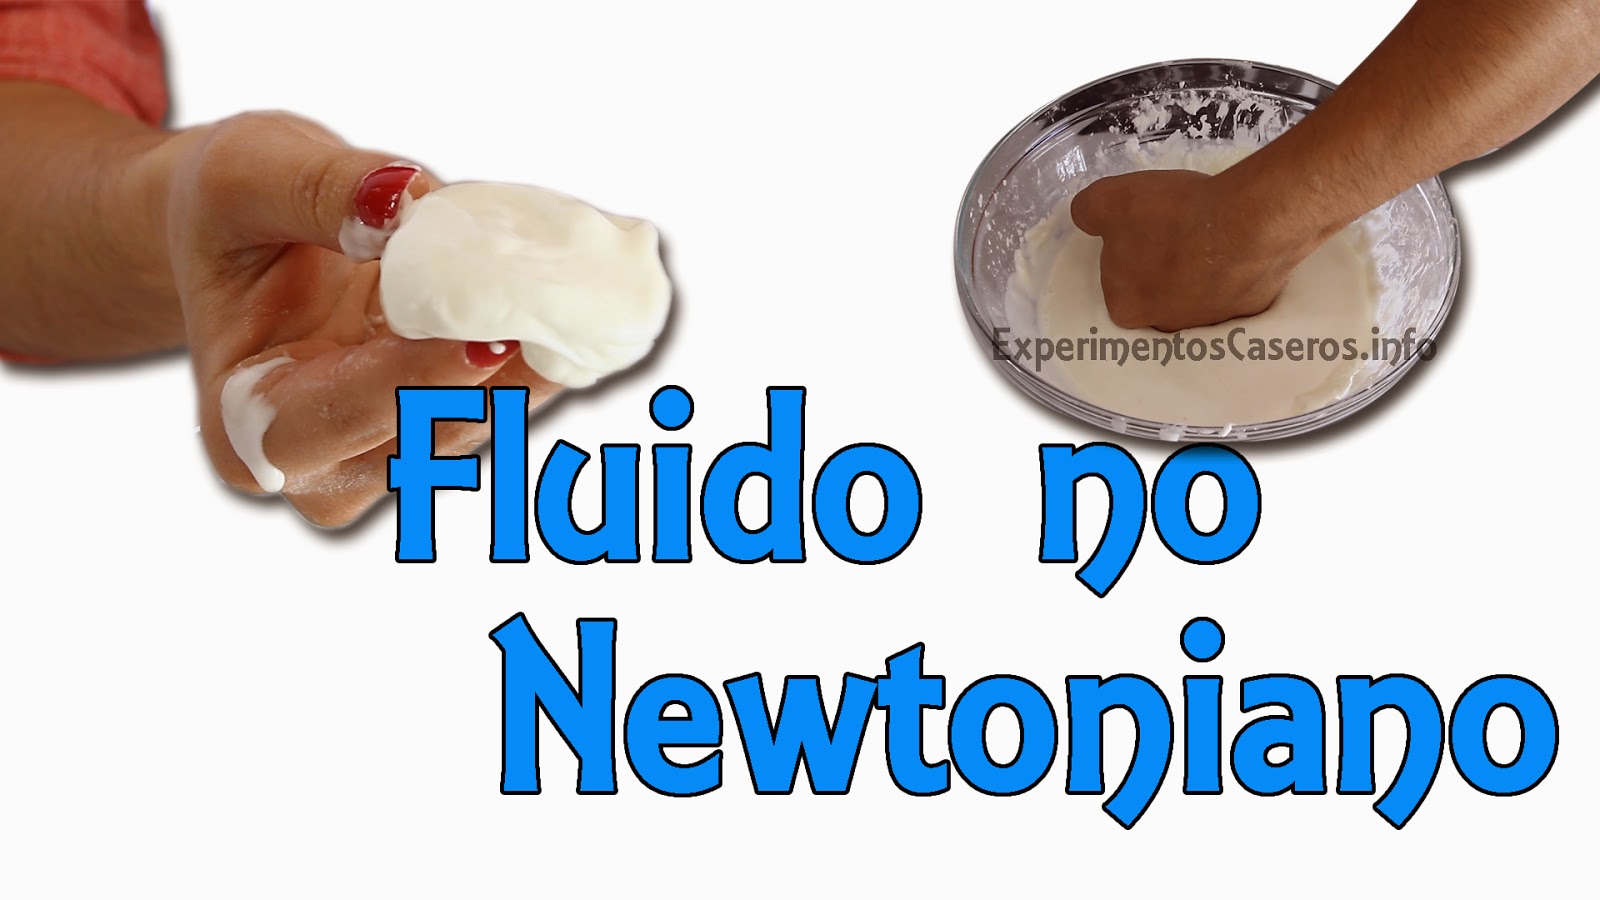 image for FLUIDO NO NEWTONIANO